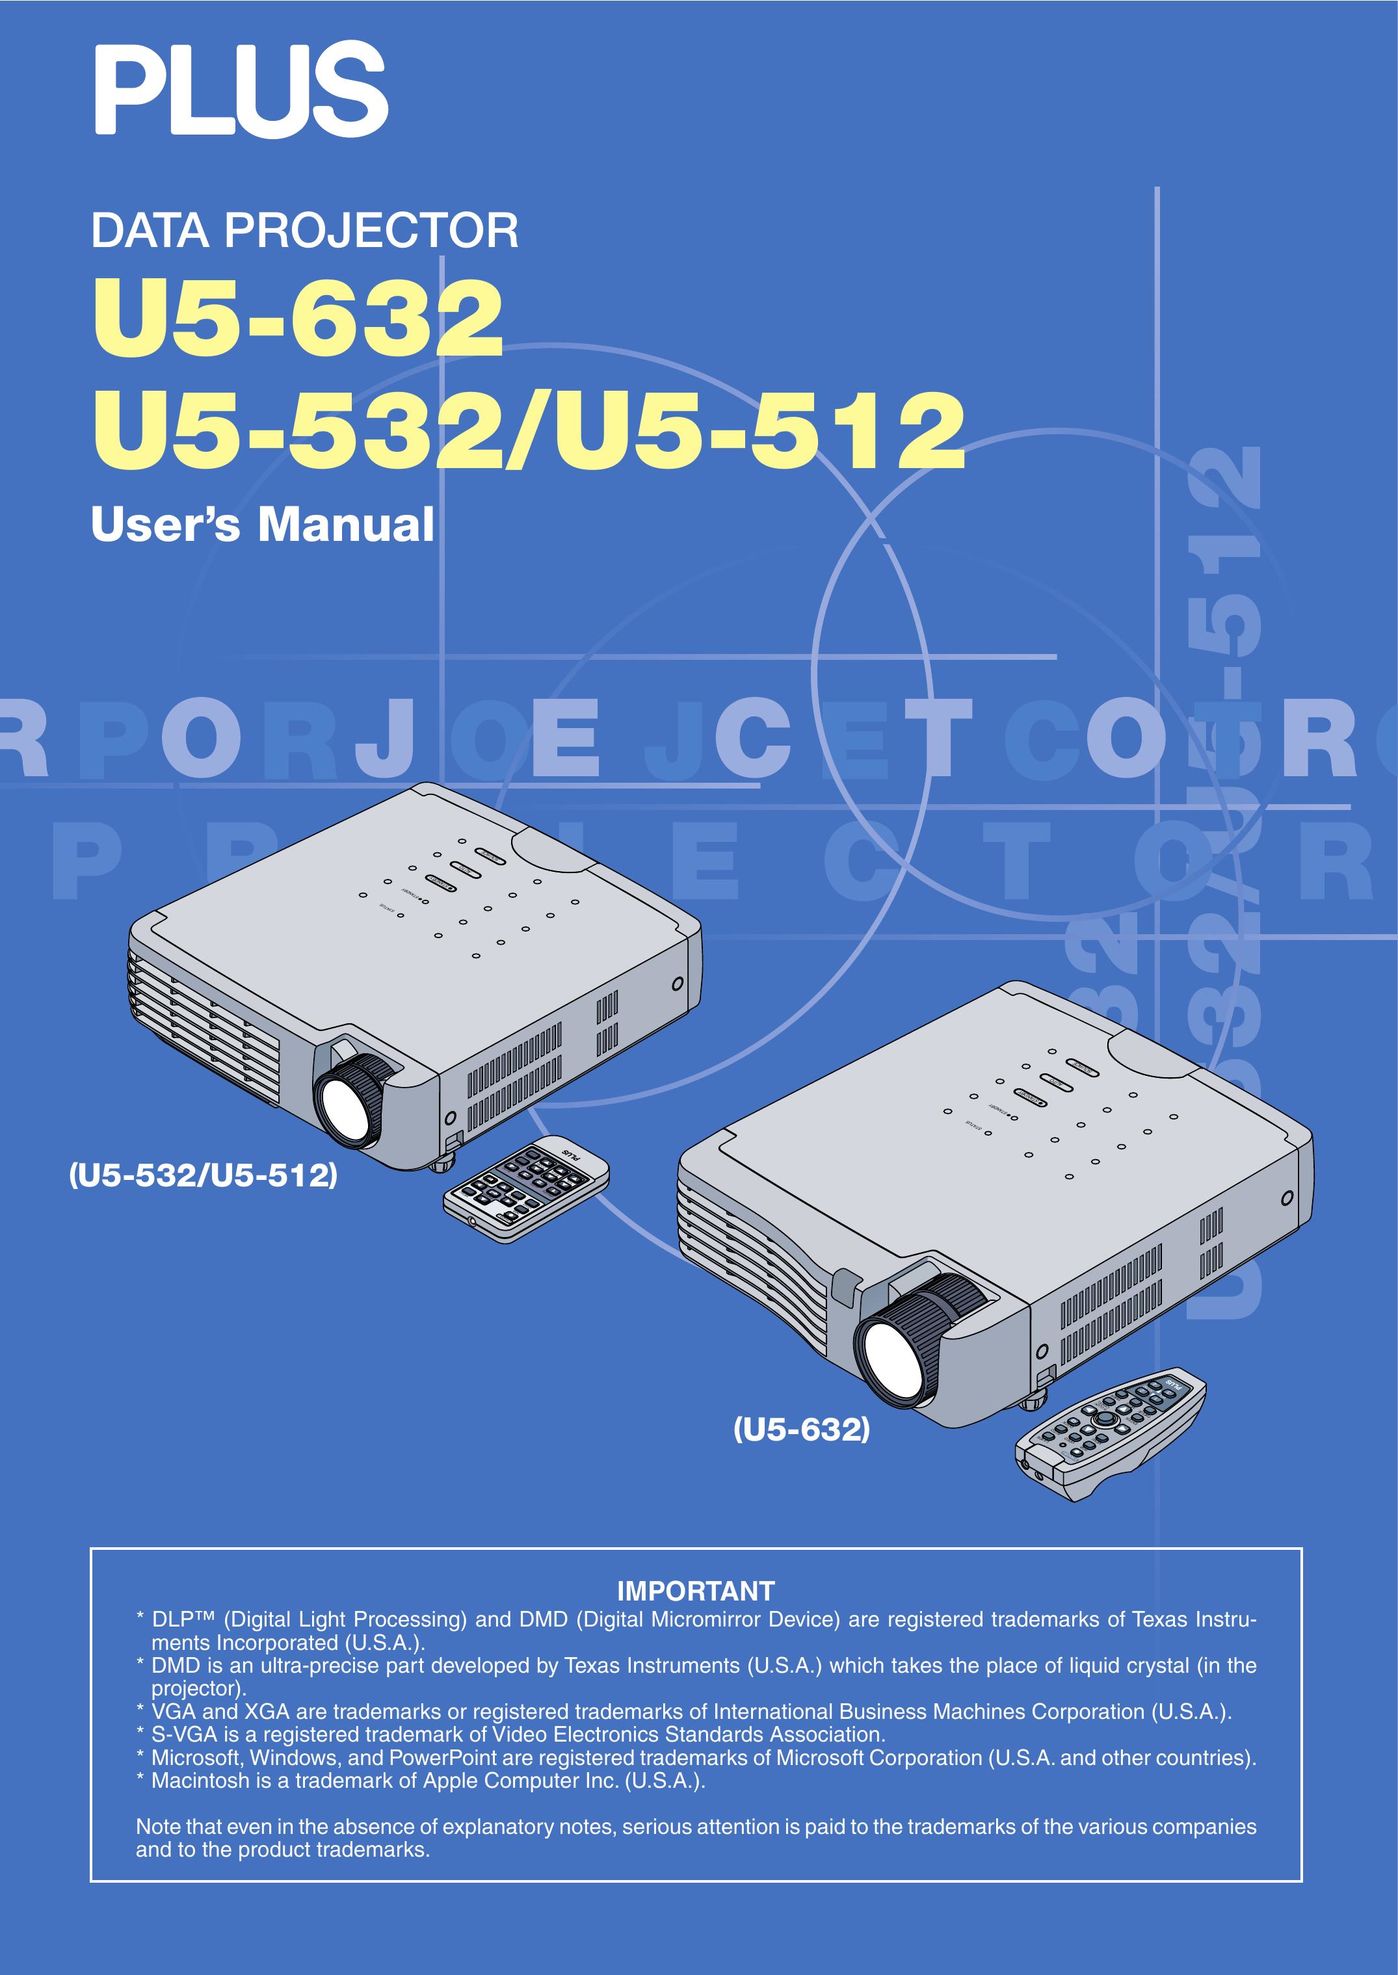 PLUS Vision U5-632 Projector User Manual